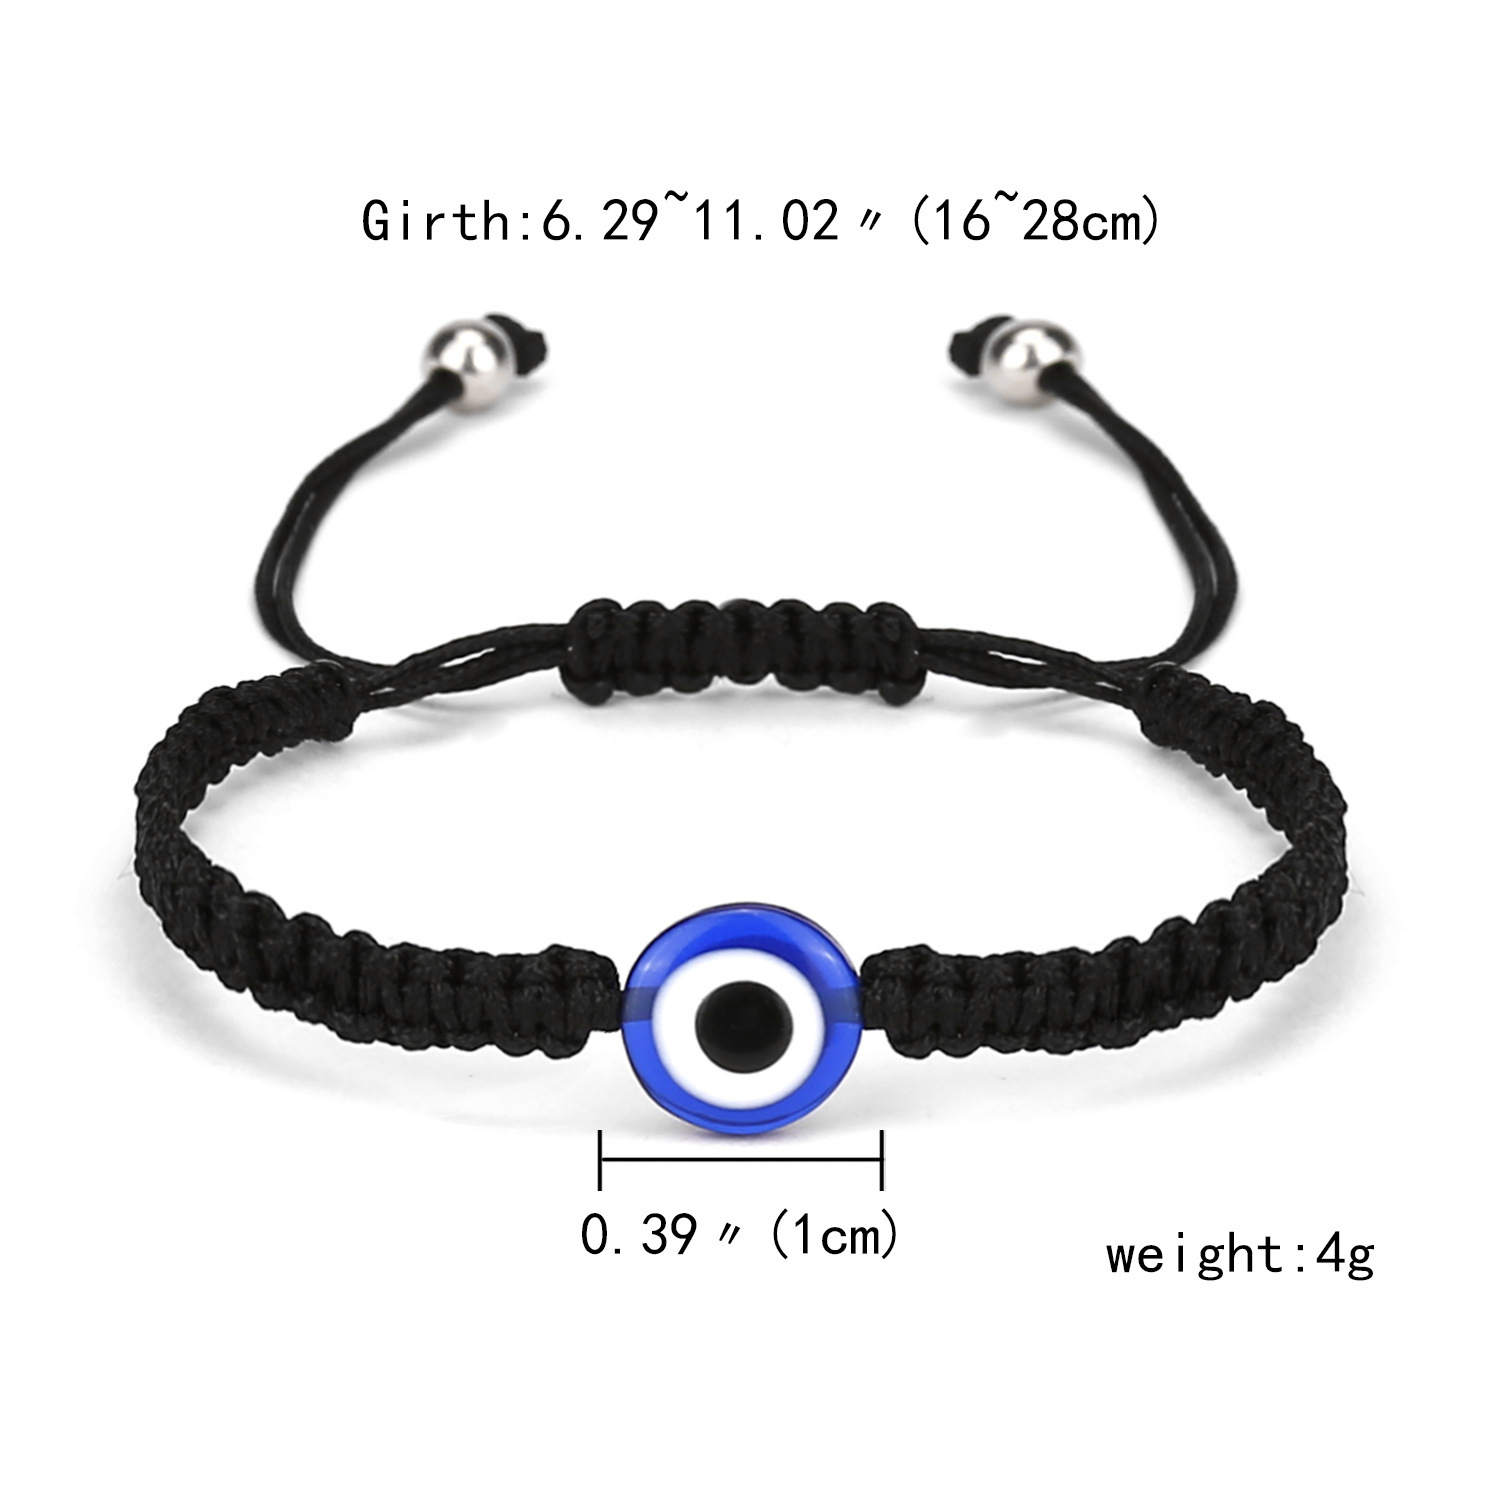 Fashion adjustable bracelet creative new blue eye bracelet evil eye red rope braided braceletpicture6